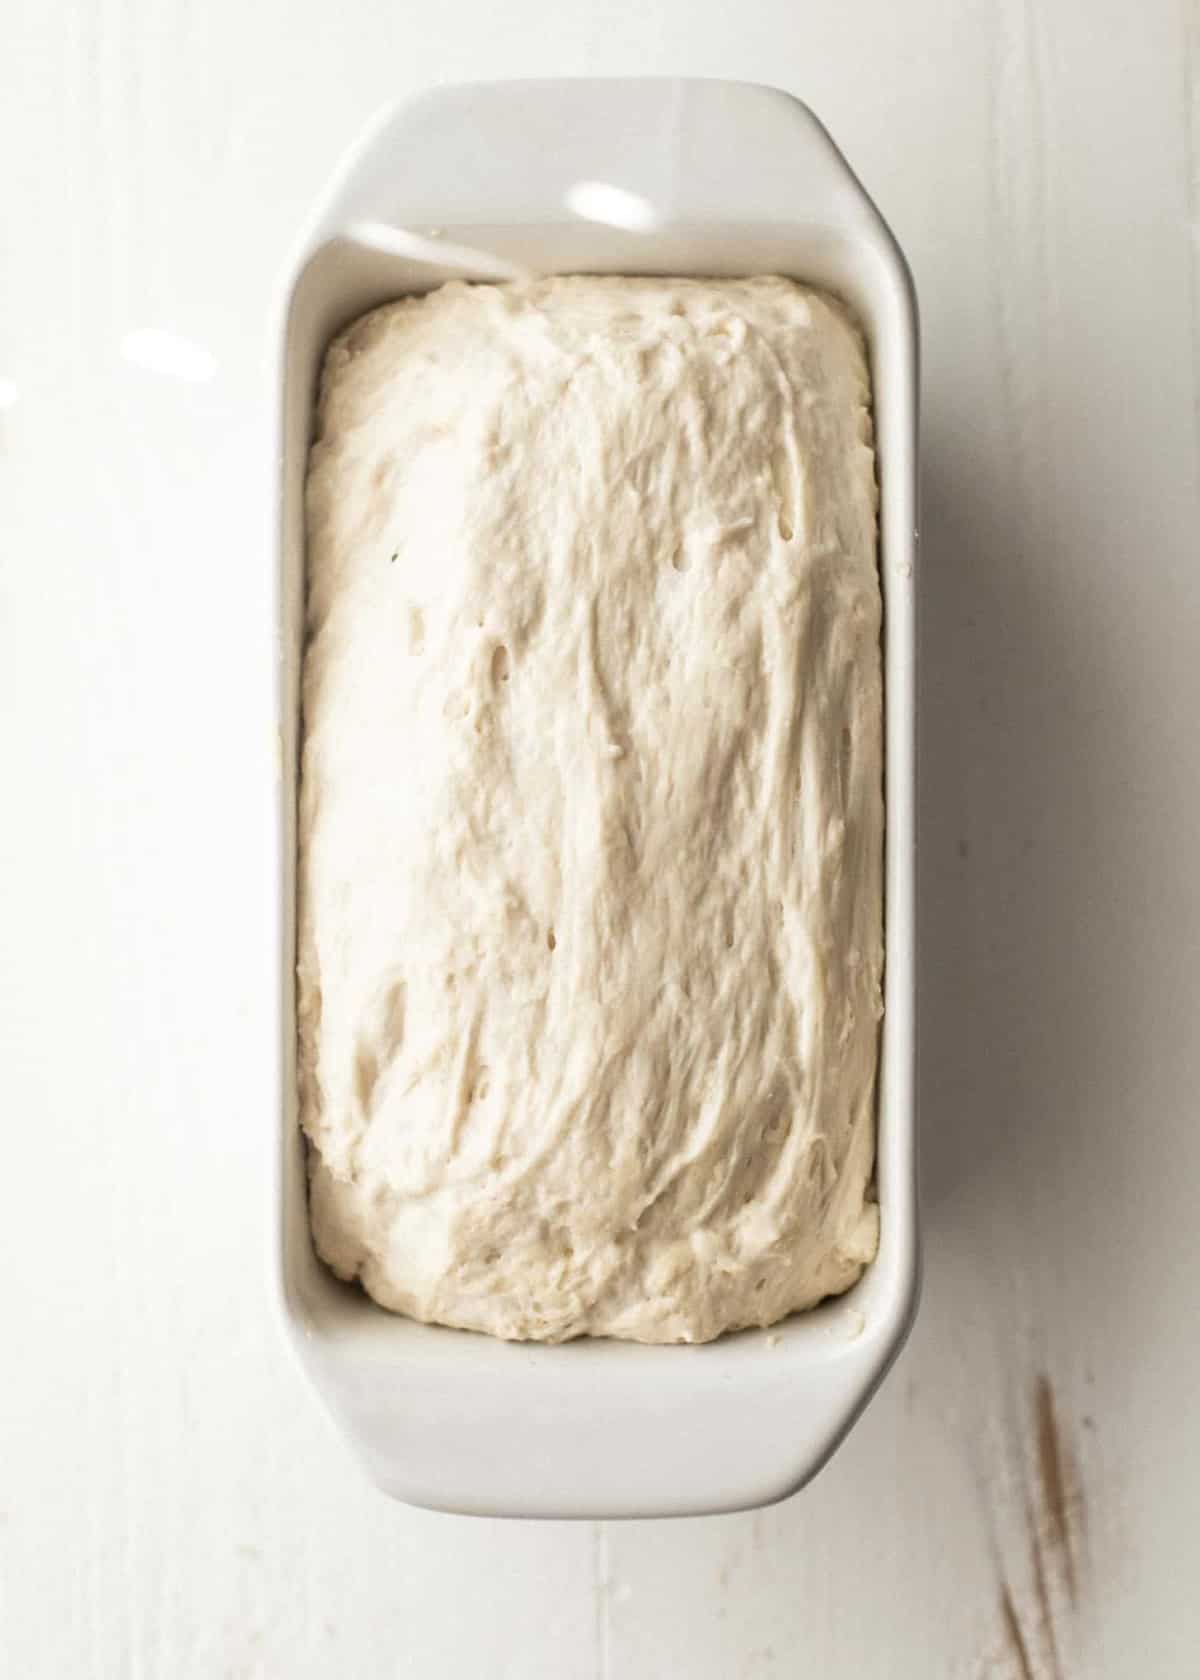 No knead sandwich bread dough in a white loaf pan